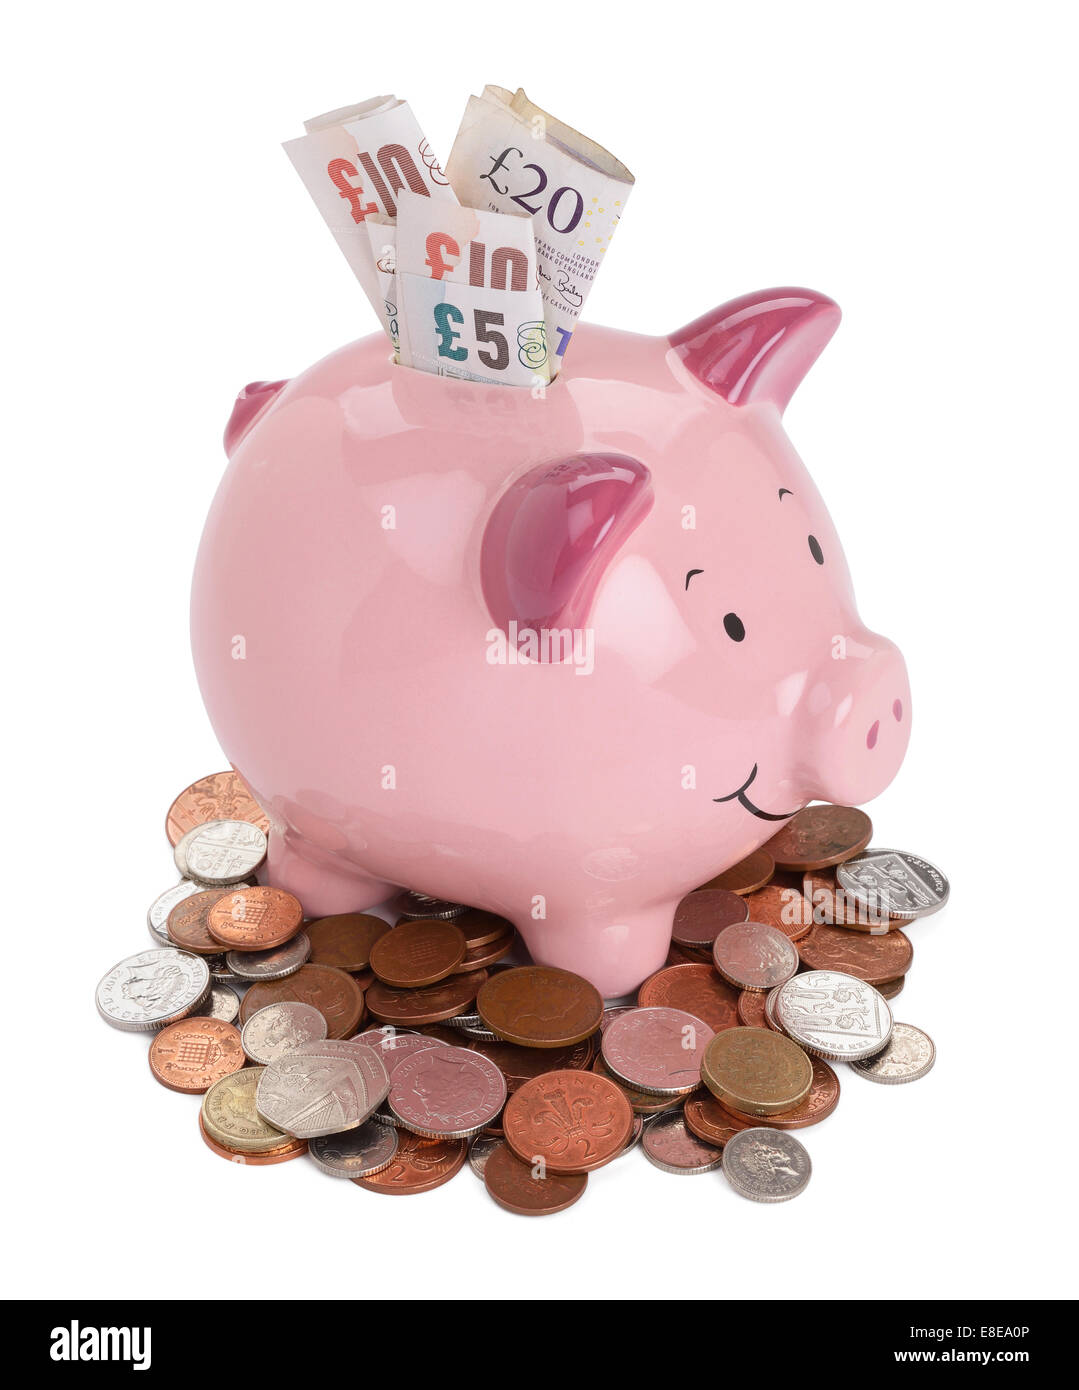 LARGE NEW £5 FIVE POUND NOTE MONEY TIN SAVING BOX PIGGY BANK CASH SAVINGS